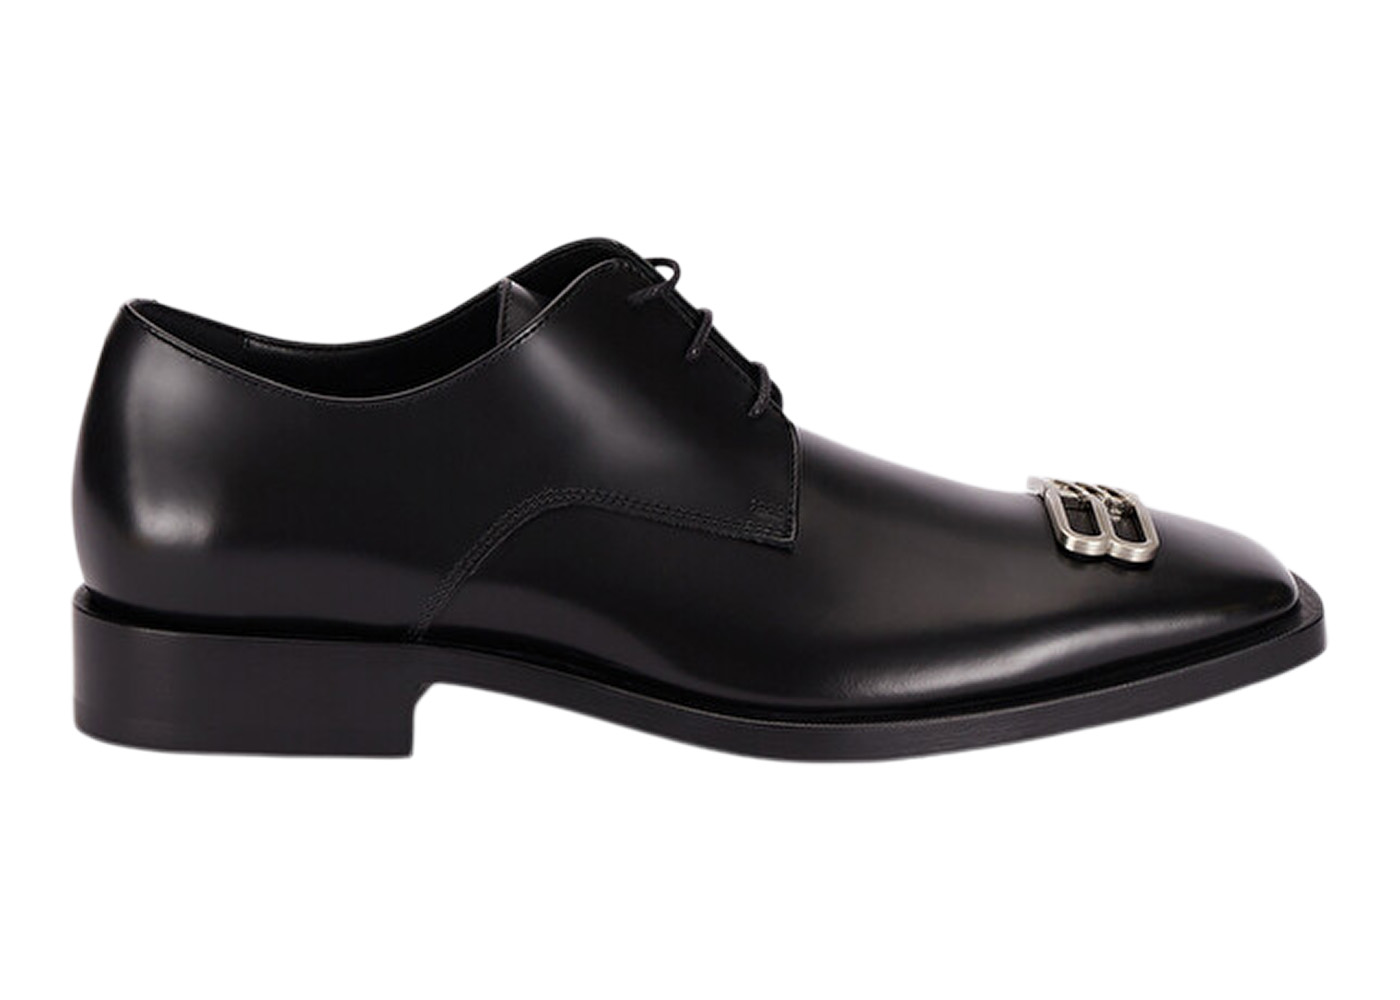 Balenciaga Rim Derby Shoes Black Leather Men's - 712642WA8E11081 - US